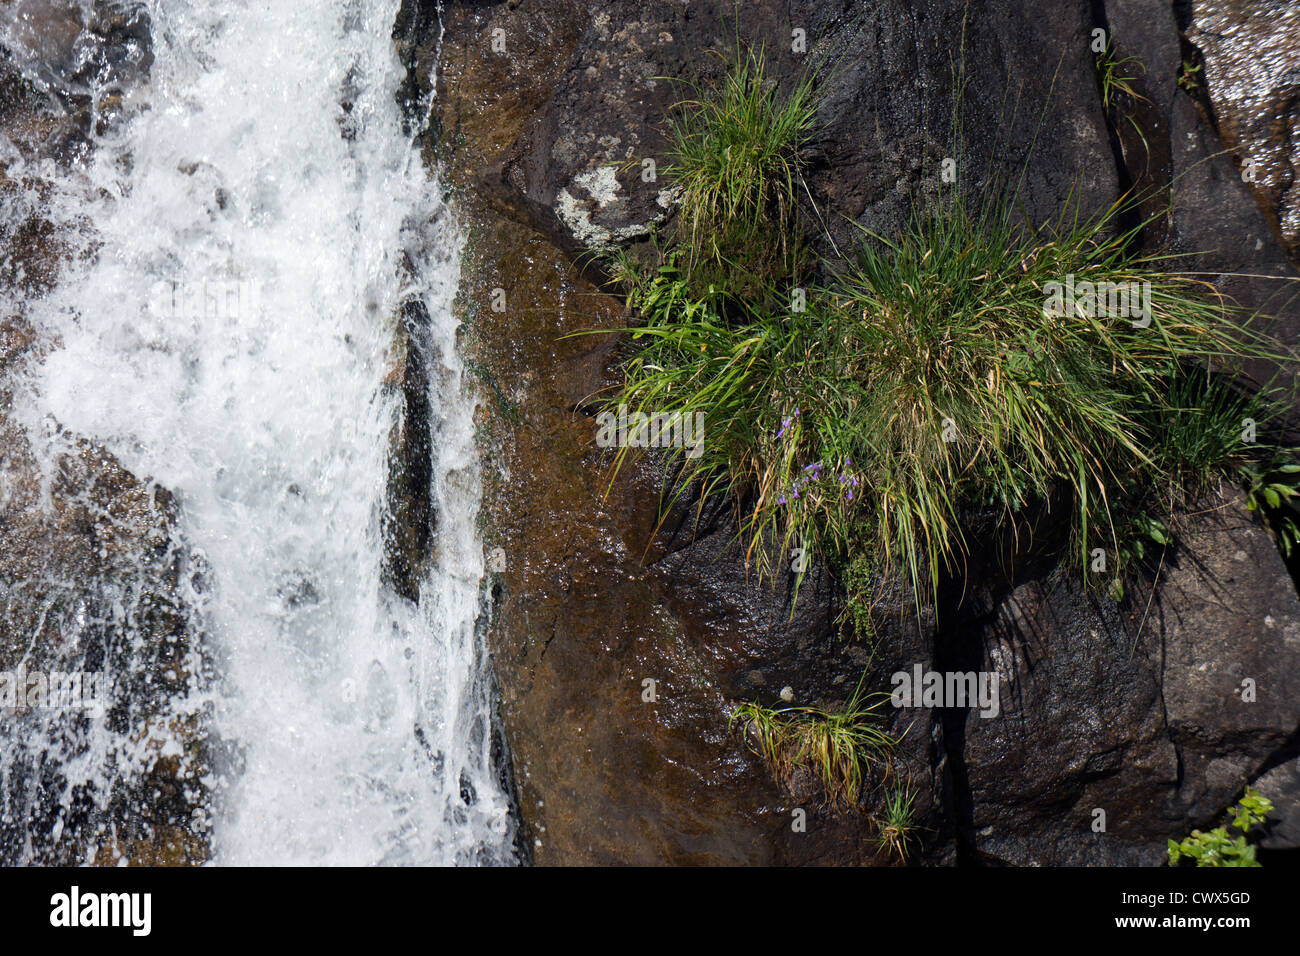 Wasserfall, Kaskaden, Pyrenäen, poring Wasser Stockfoto